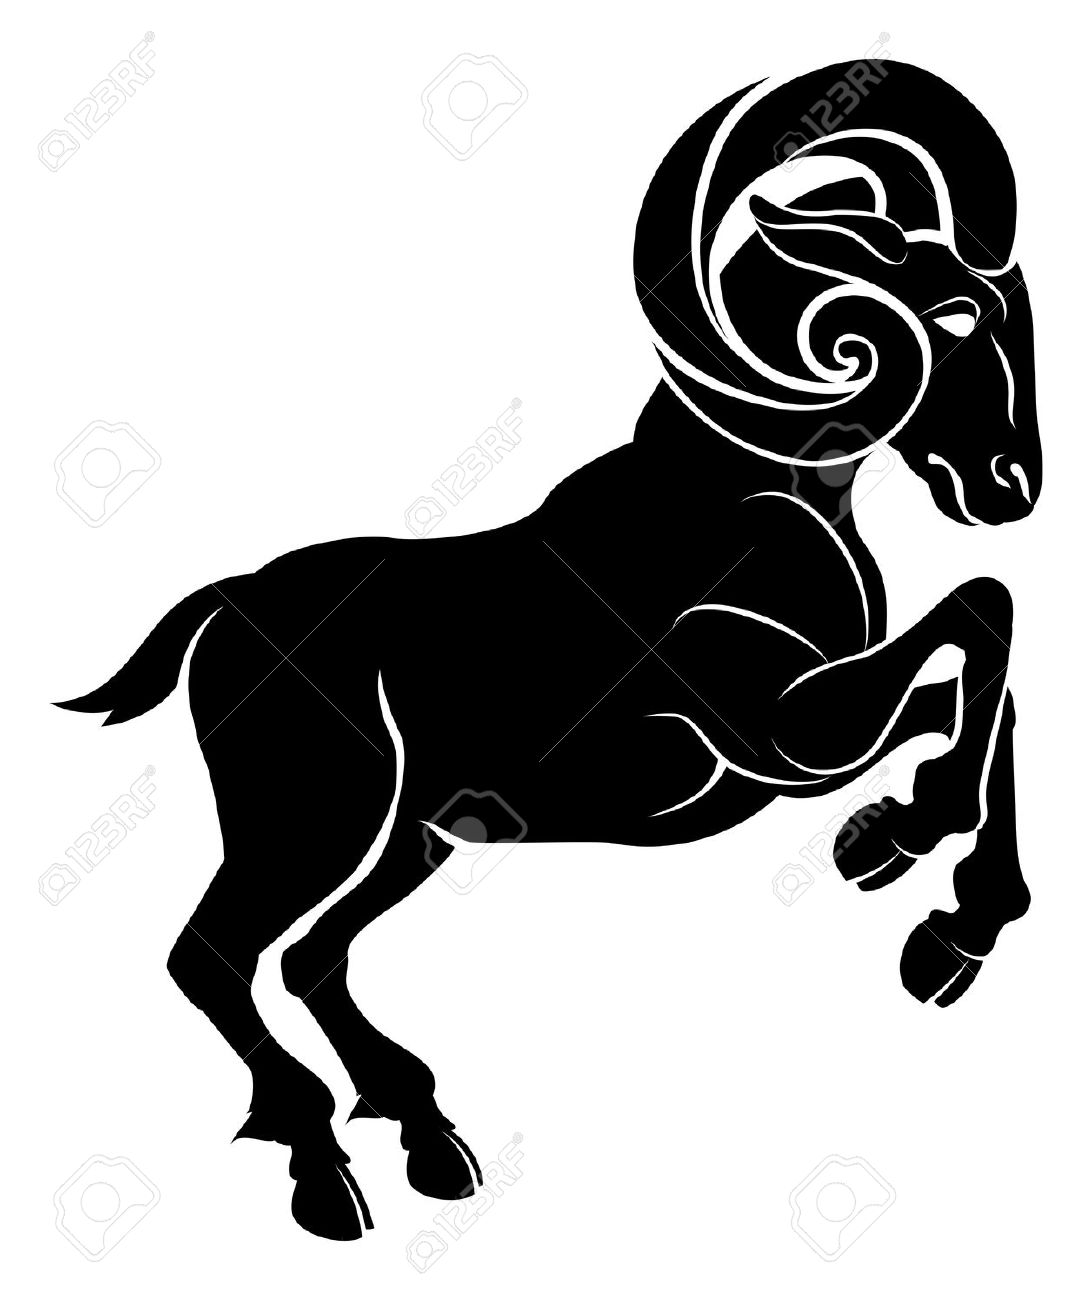 ram: An illustration of a stylised black ram or sheep perhaps a ram tattoo Illustration